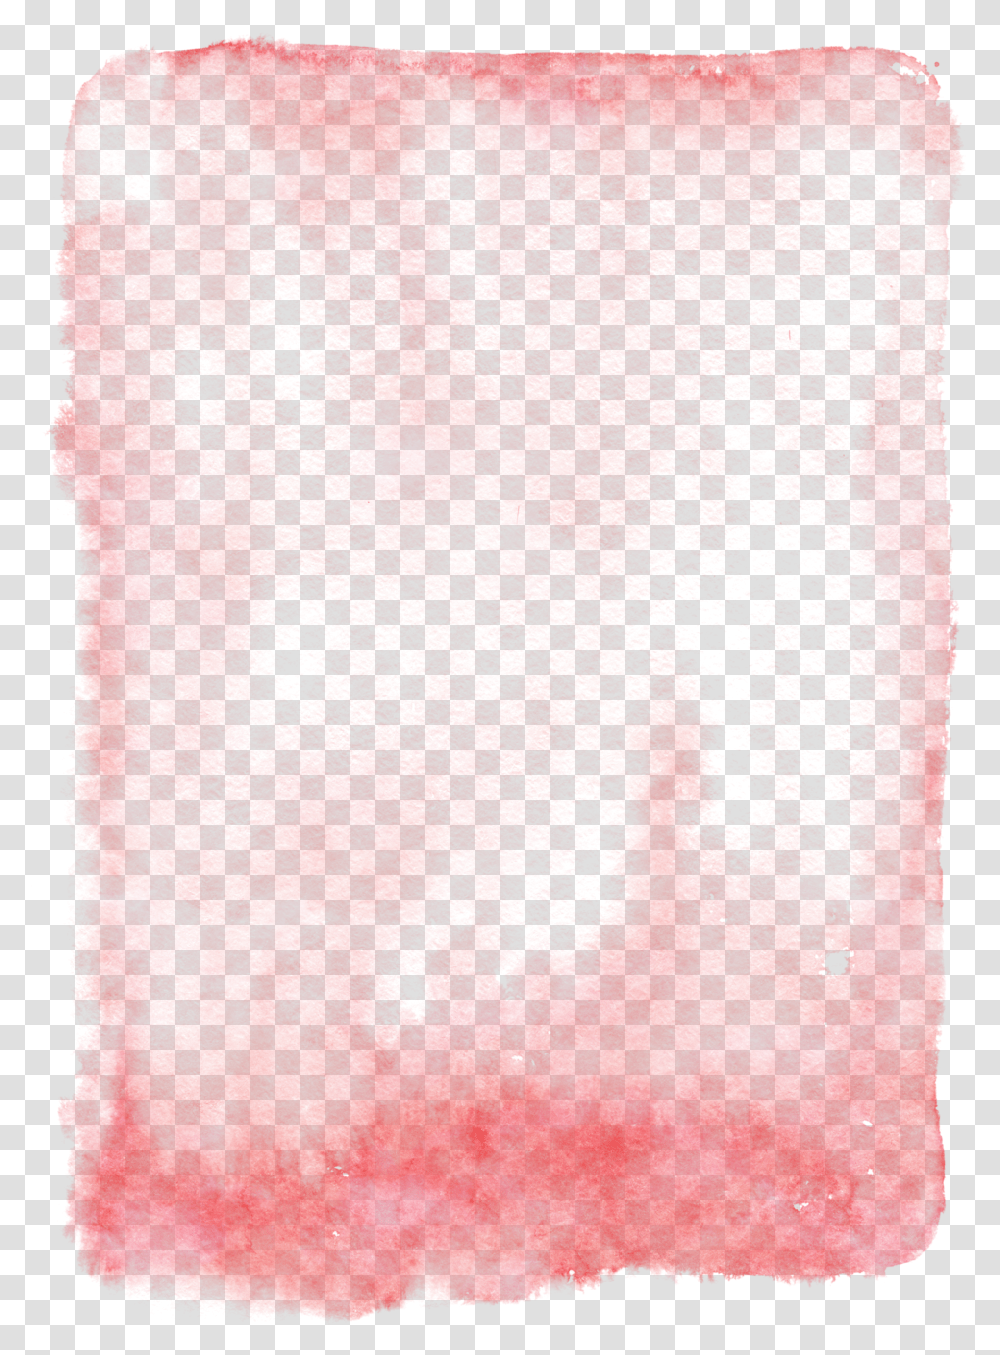 Download Pink Red Watercolor Brush Stroke Freebie Watercolor Gold Paint Brush Stroke No Background Transparent Png